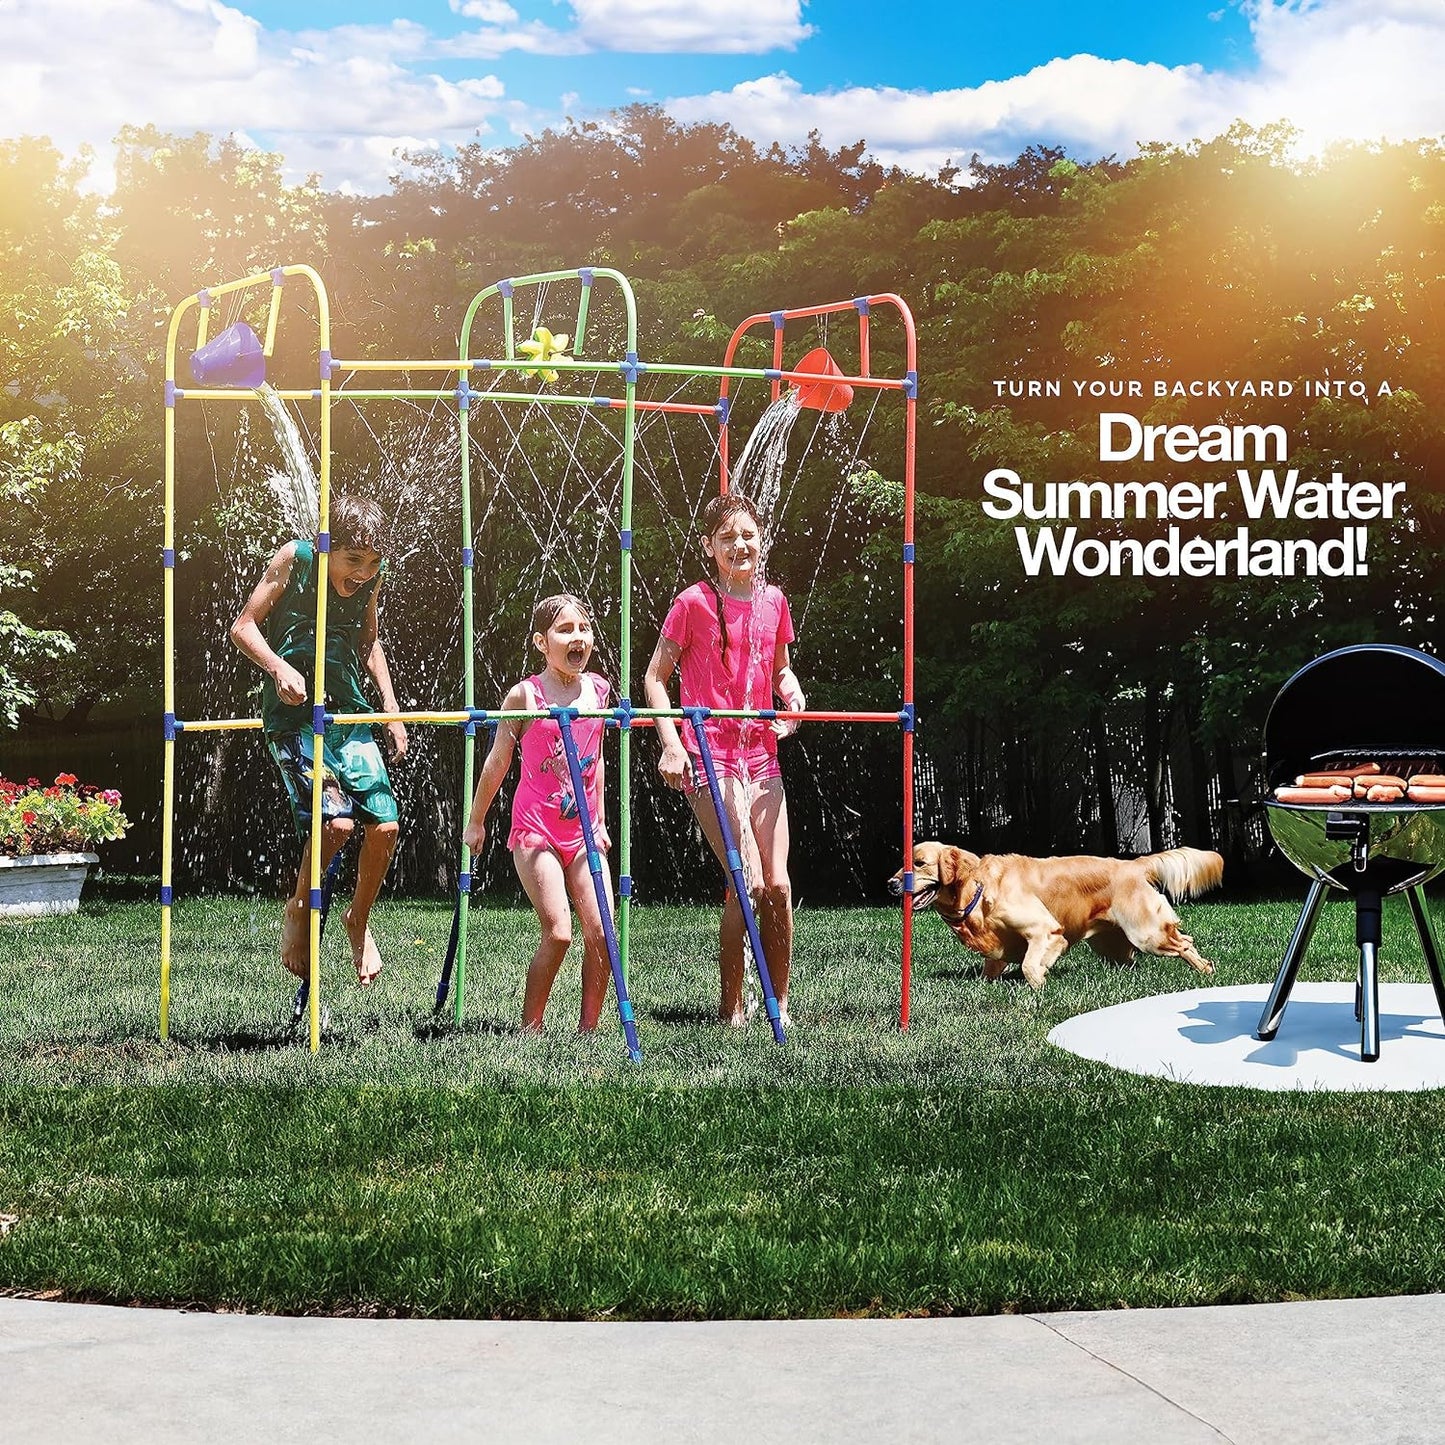 Backyard Waterpark with Splash Wheel, Dump Buckets for Kids Outdoor Water Play